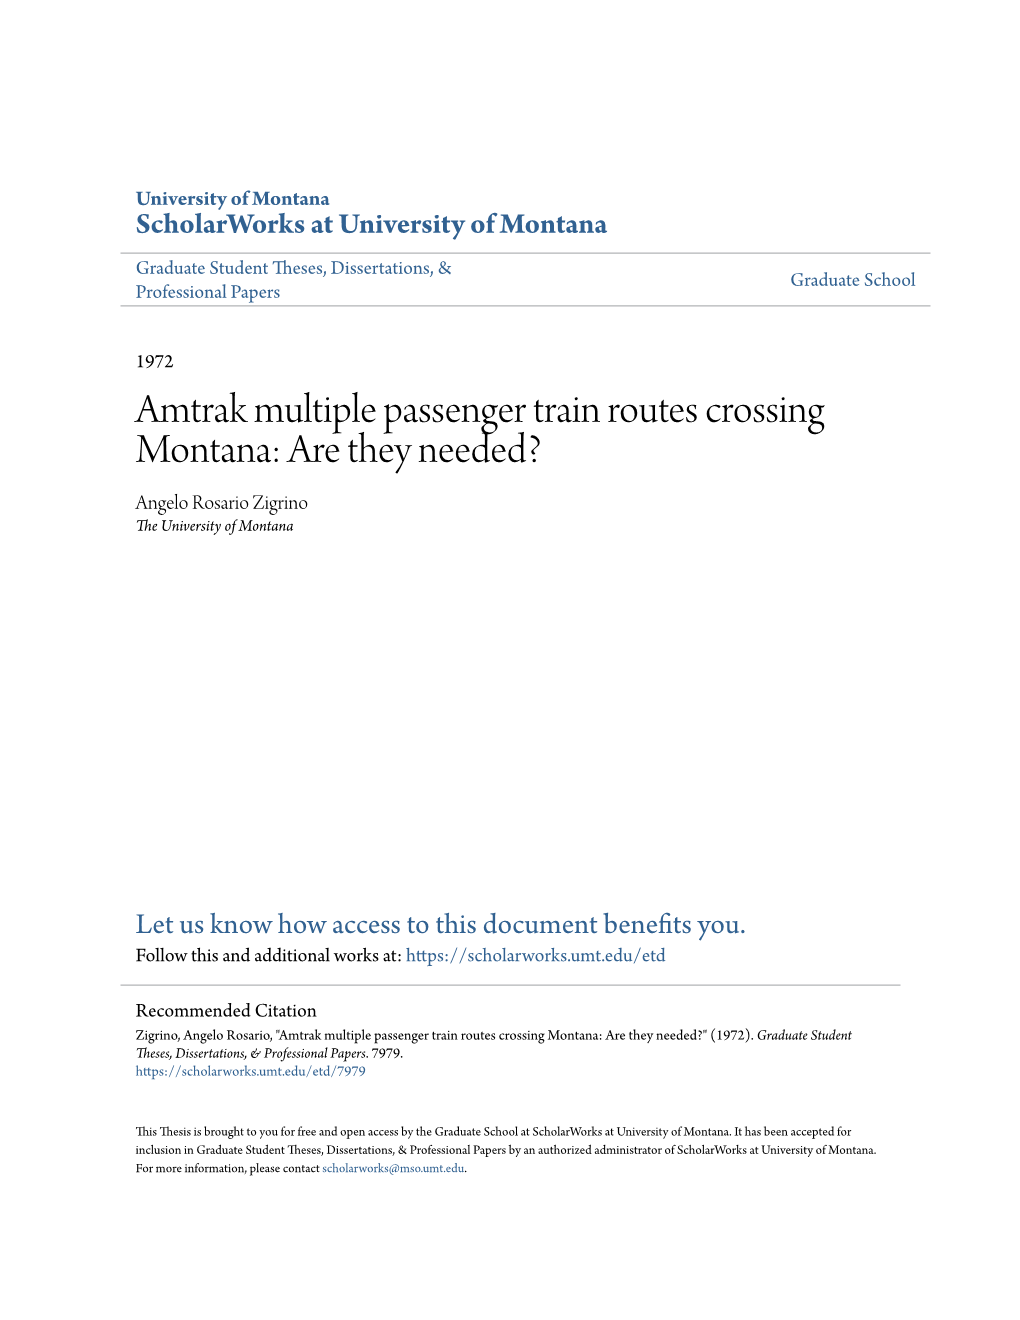 Amtrak Multiple Passenger Train Routes Crossing Montana: Are They Needed? Angelo Rosario Zigrino the University of Montana